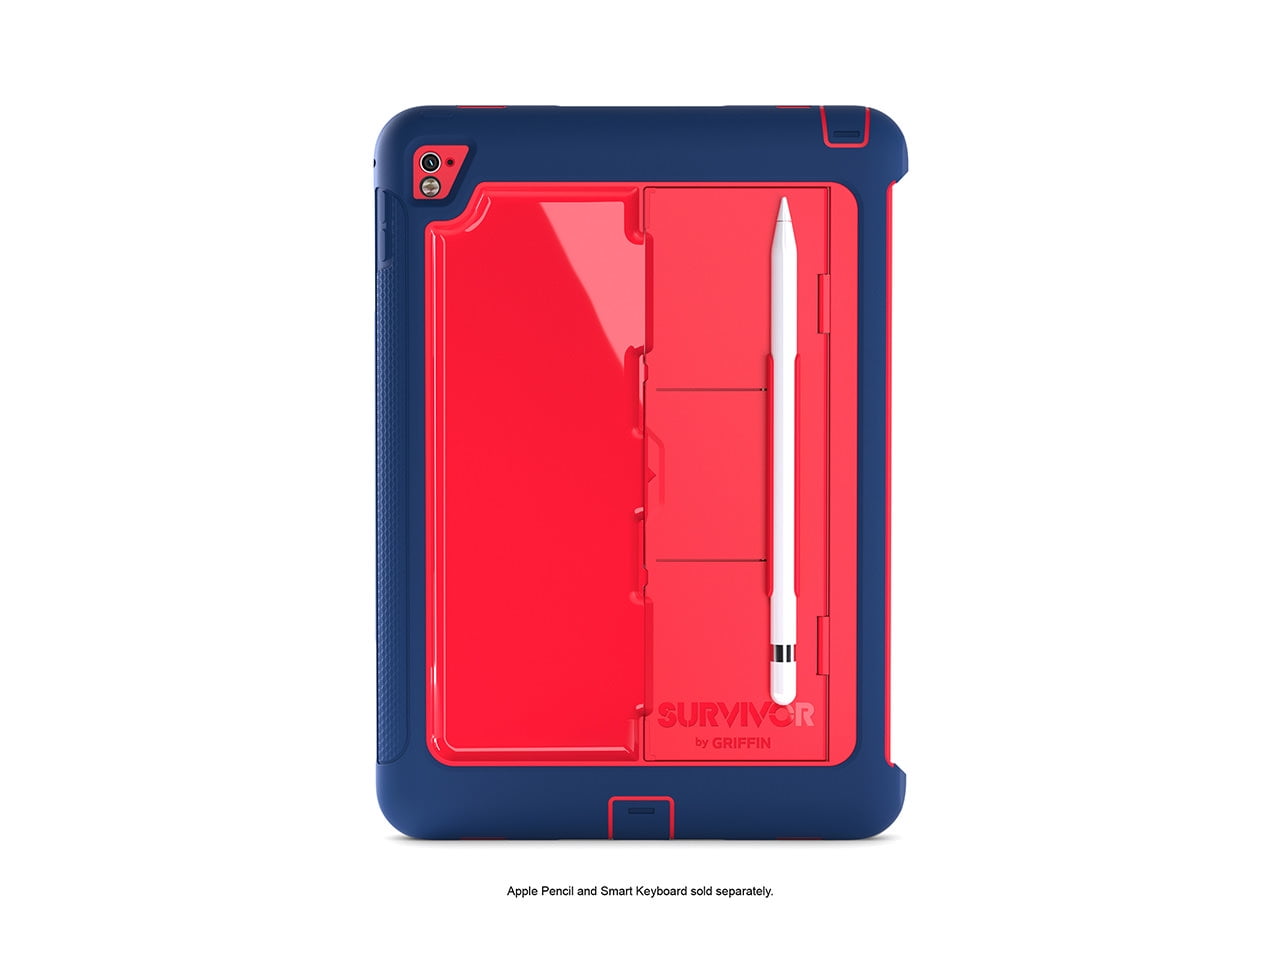 Space Gray iPad Pro 10.5 Impact Resistant Protective Folio, Slim 4 ft Drops Survivor Journey Folio 